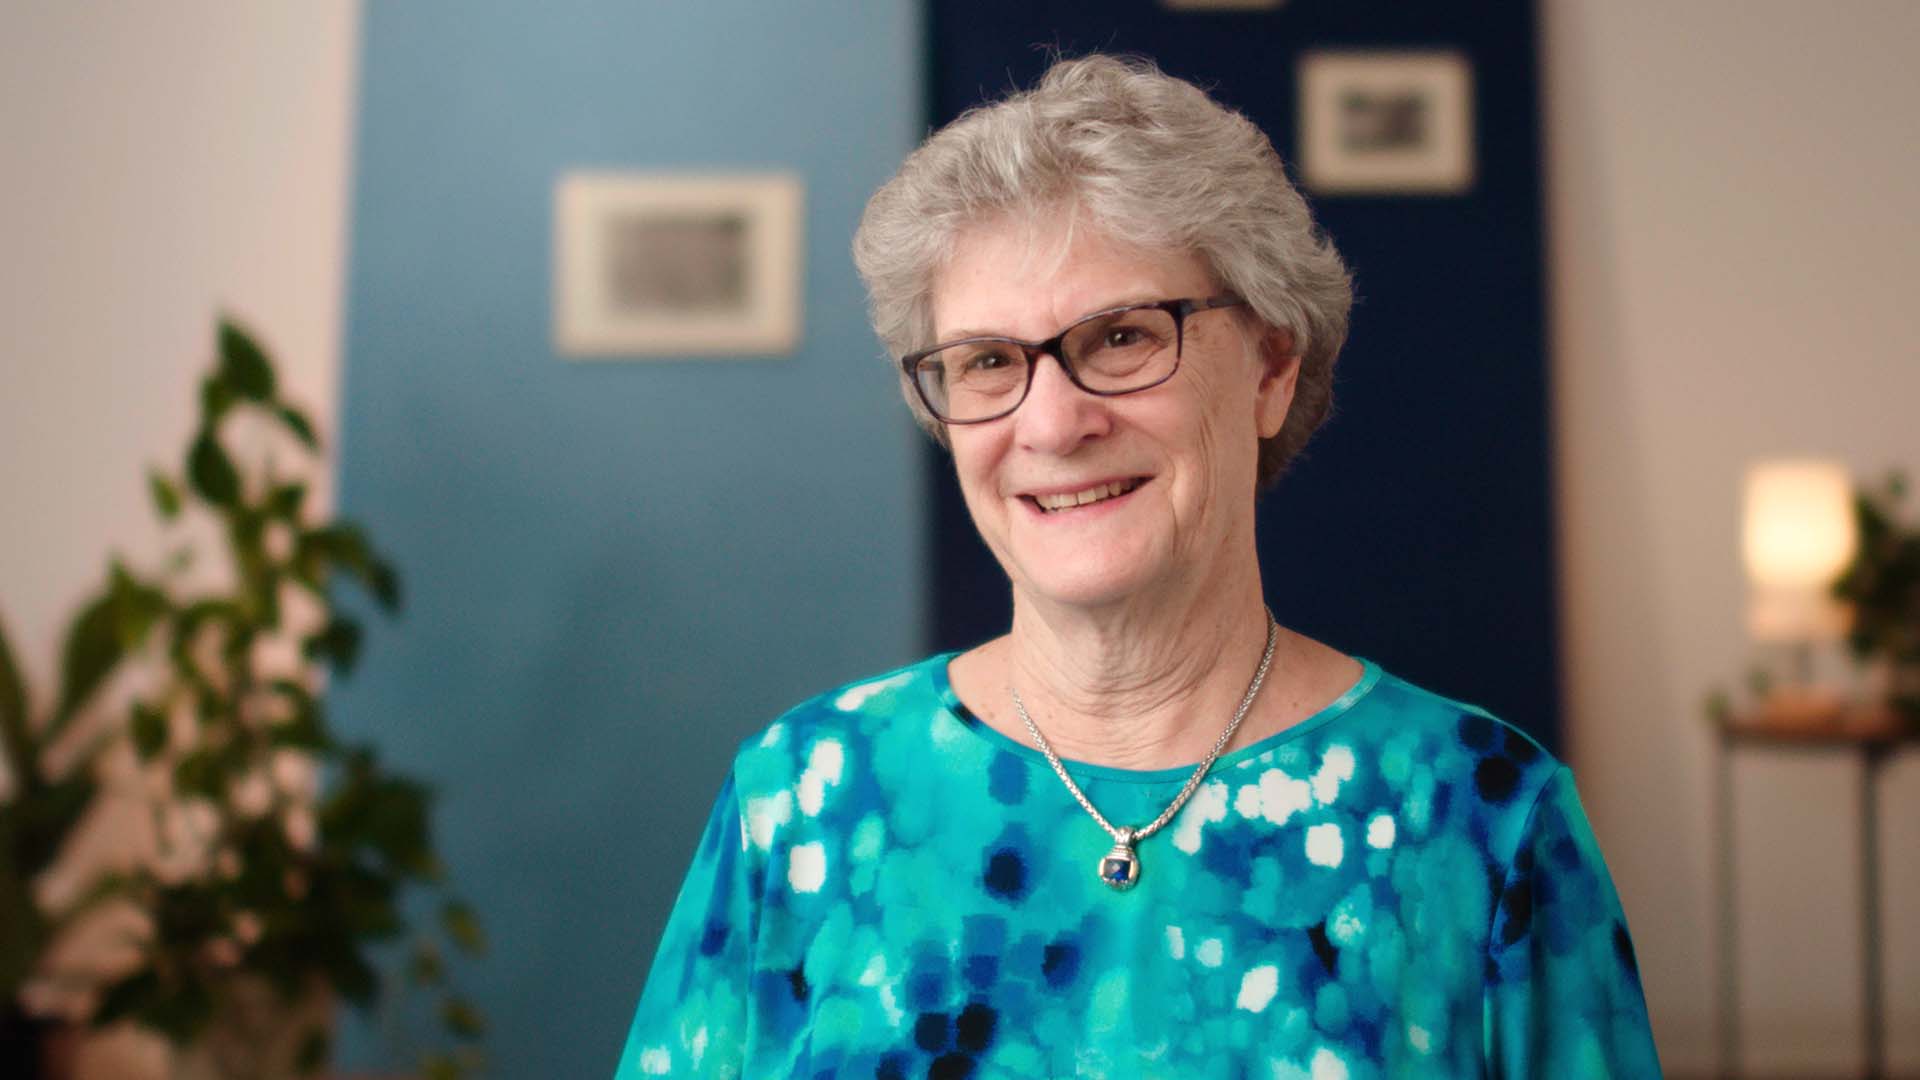 Linda Katz, recipient of the 2021 John H. Chafee LIVE UNITED Award.